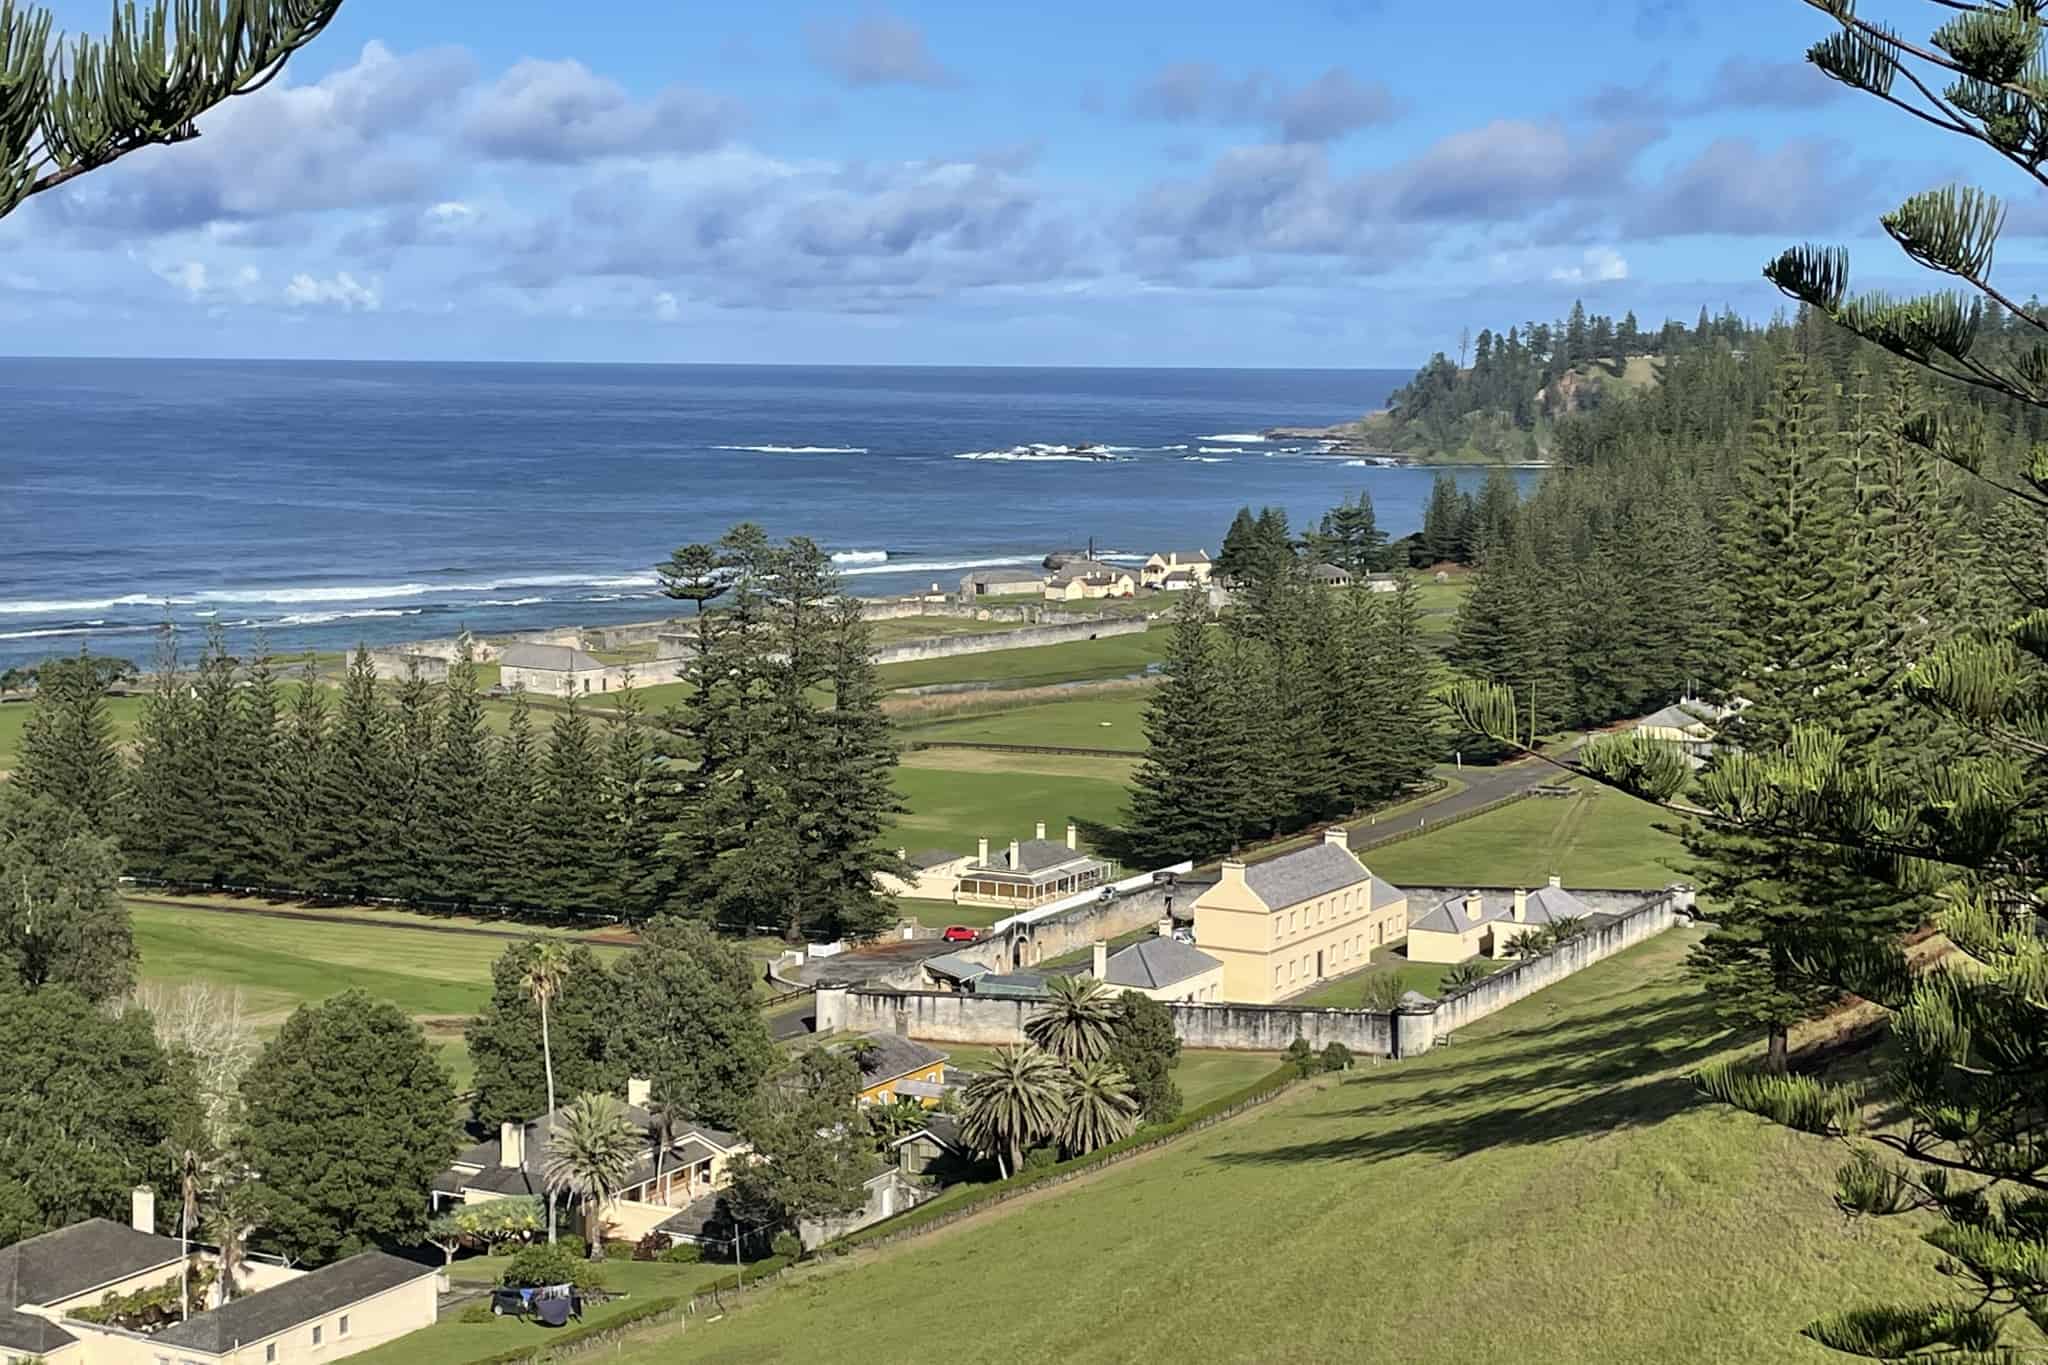 Norfolk Island view over Kingston